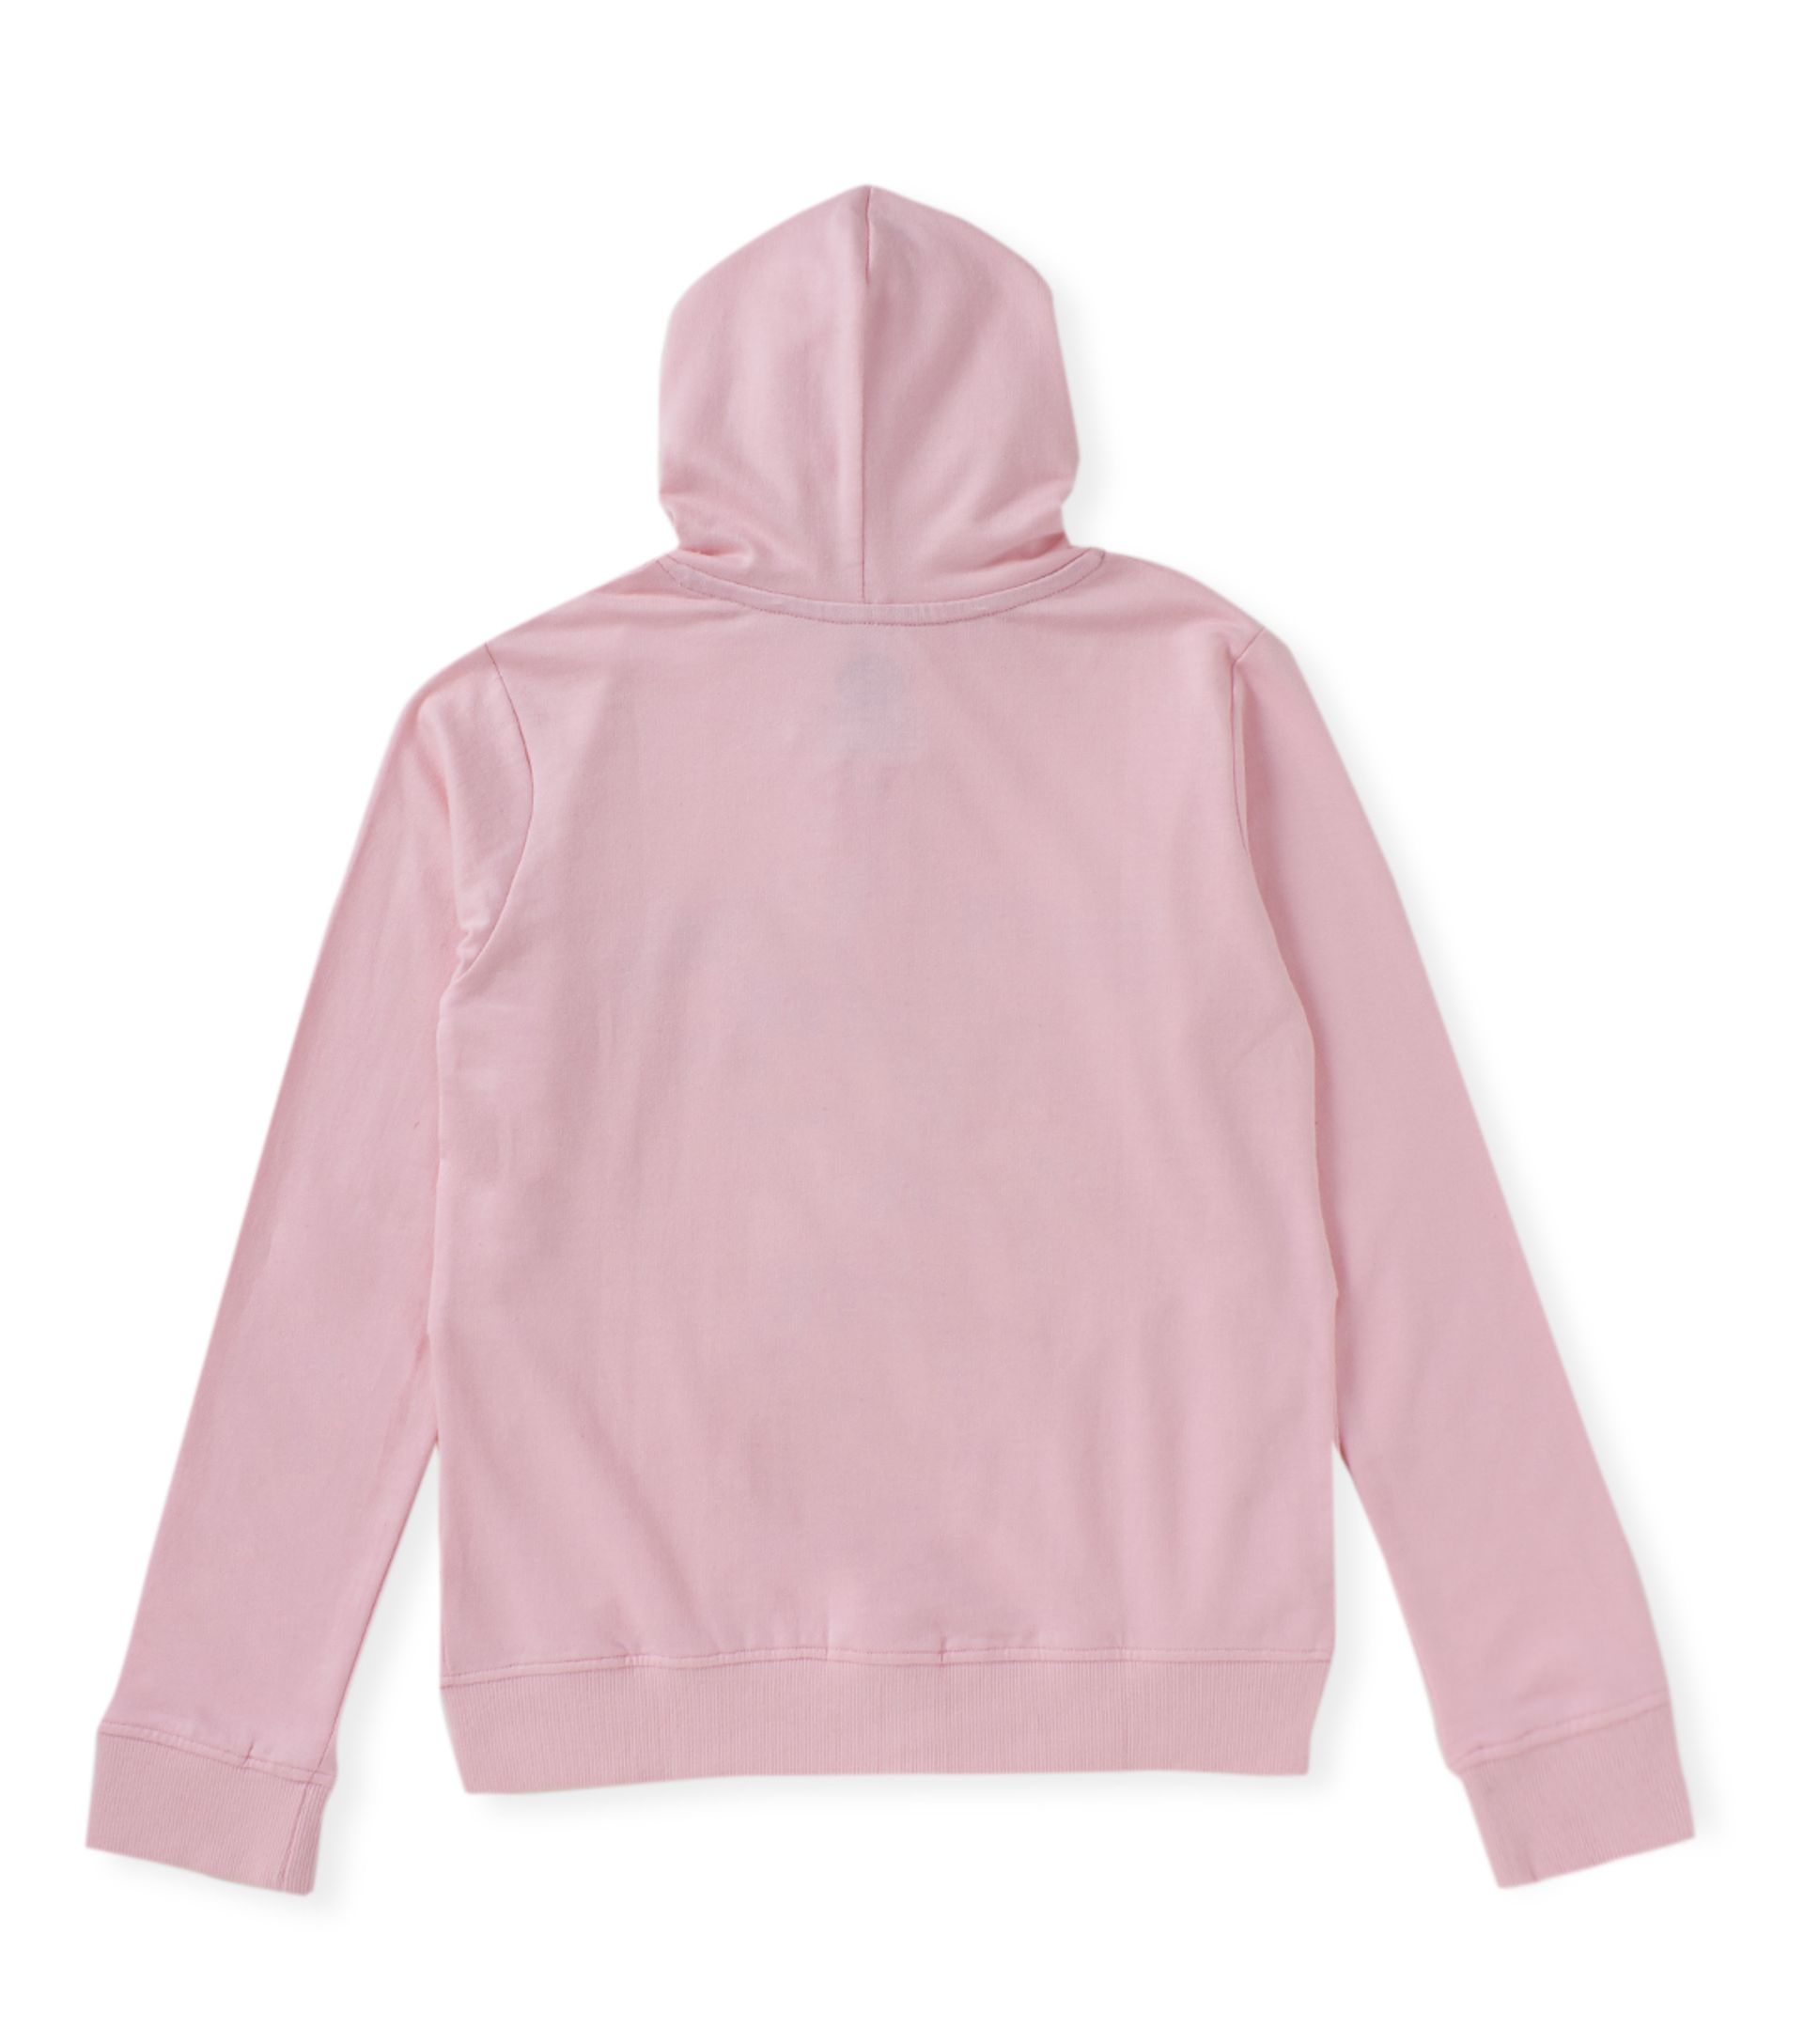 Buy Girls Winter Wear Hooded Pink Sweatshirt Online at 63% OFF | Cub McPaws